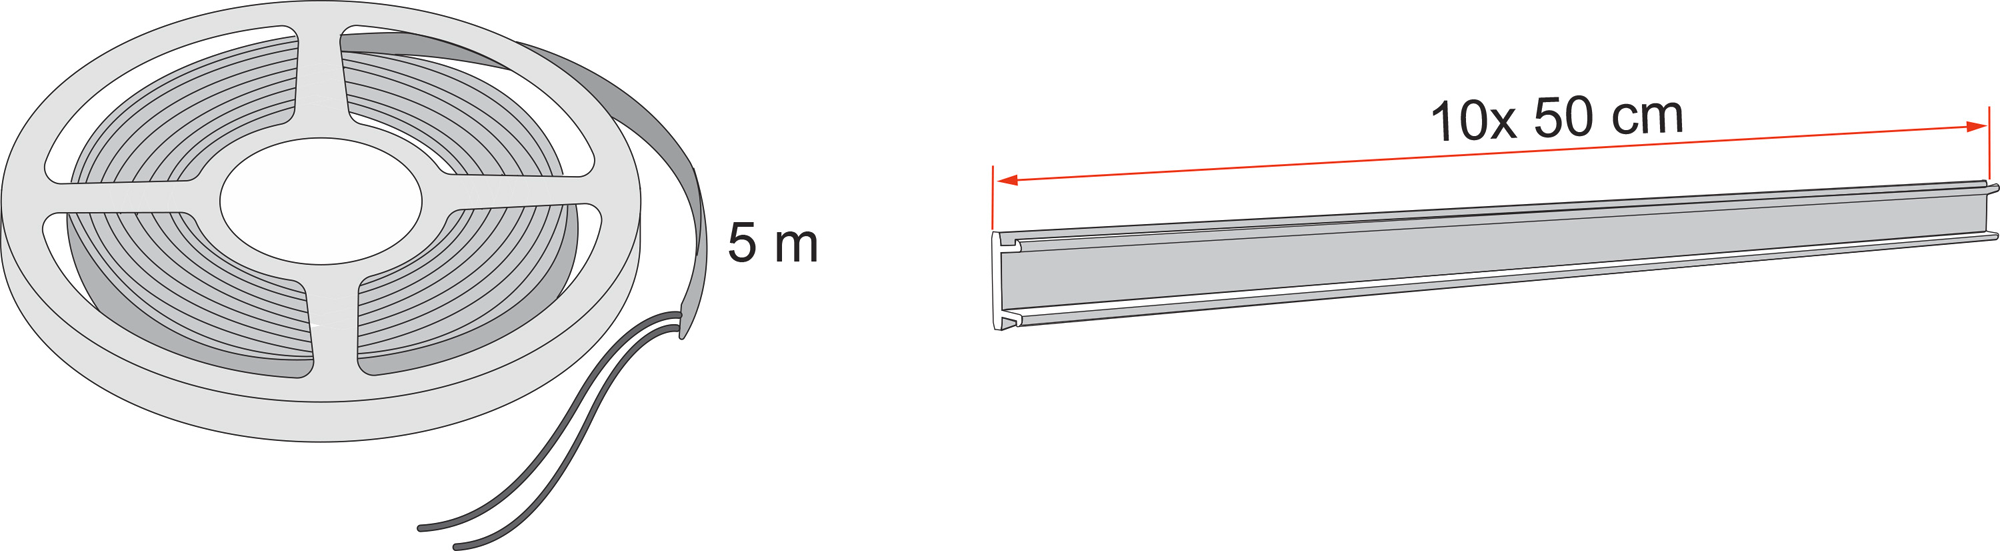 Fiamma Kit LED Strip Awning LED für Markisen F65L / F80s / F80L hohe Helligkeit